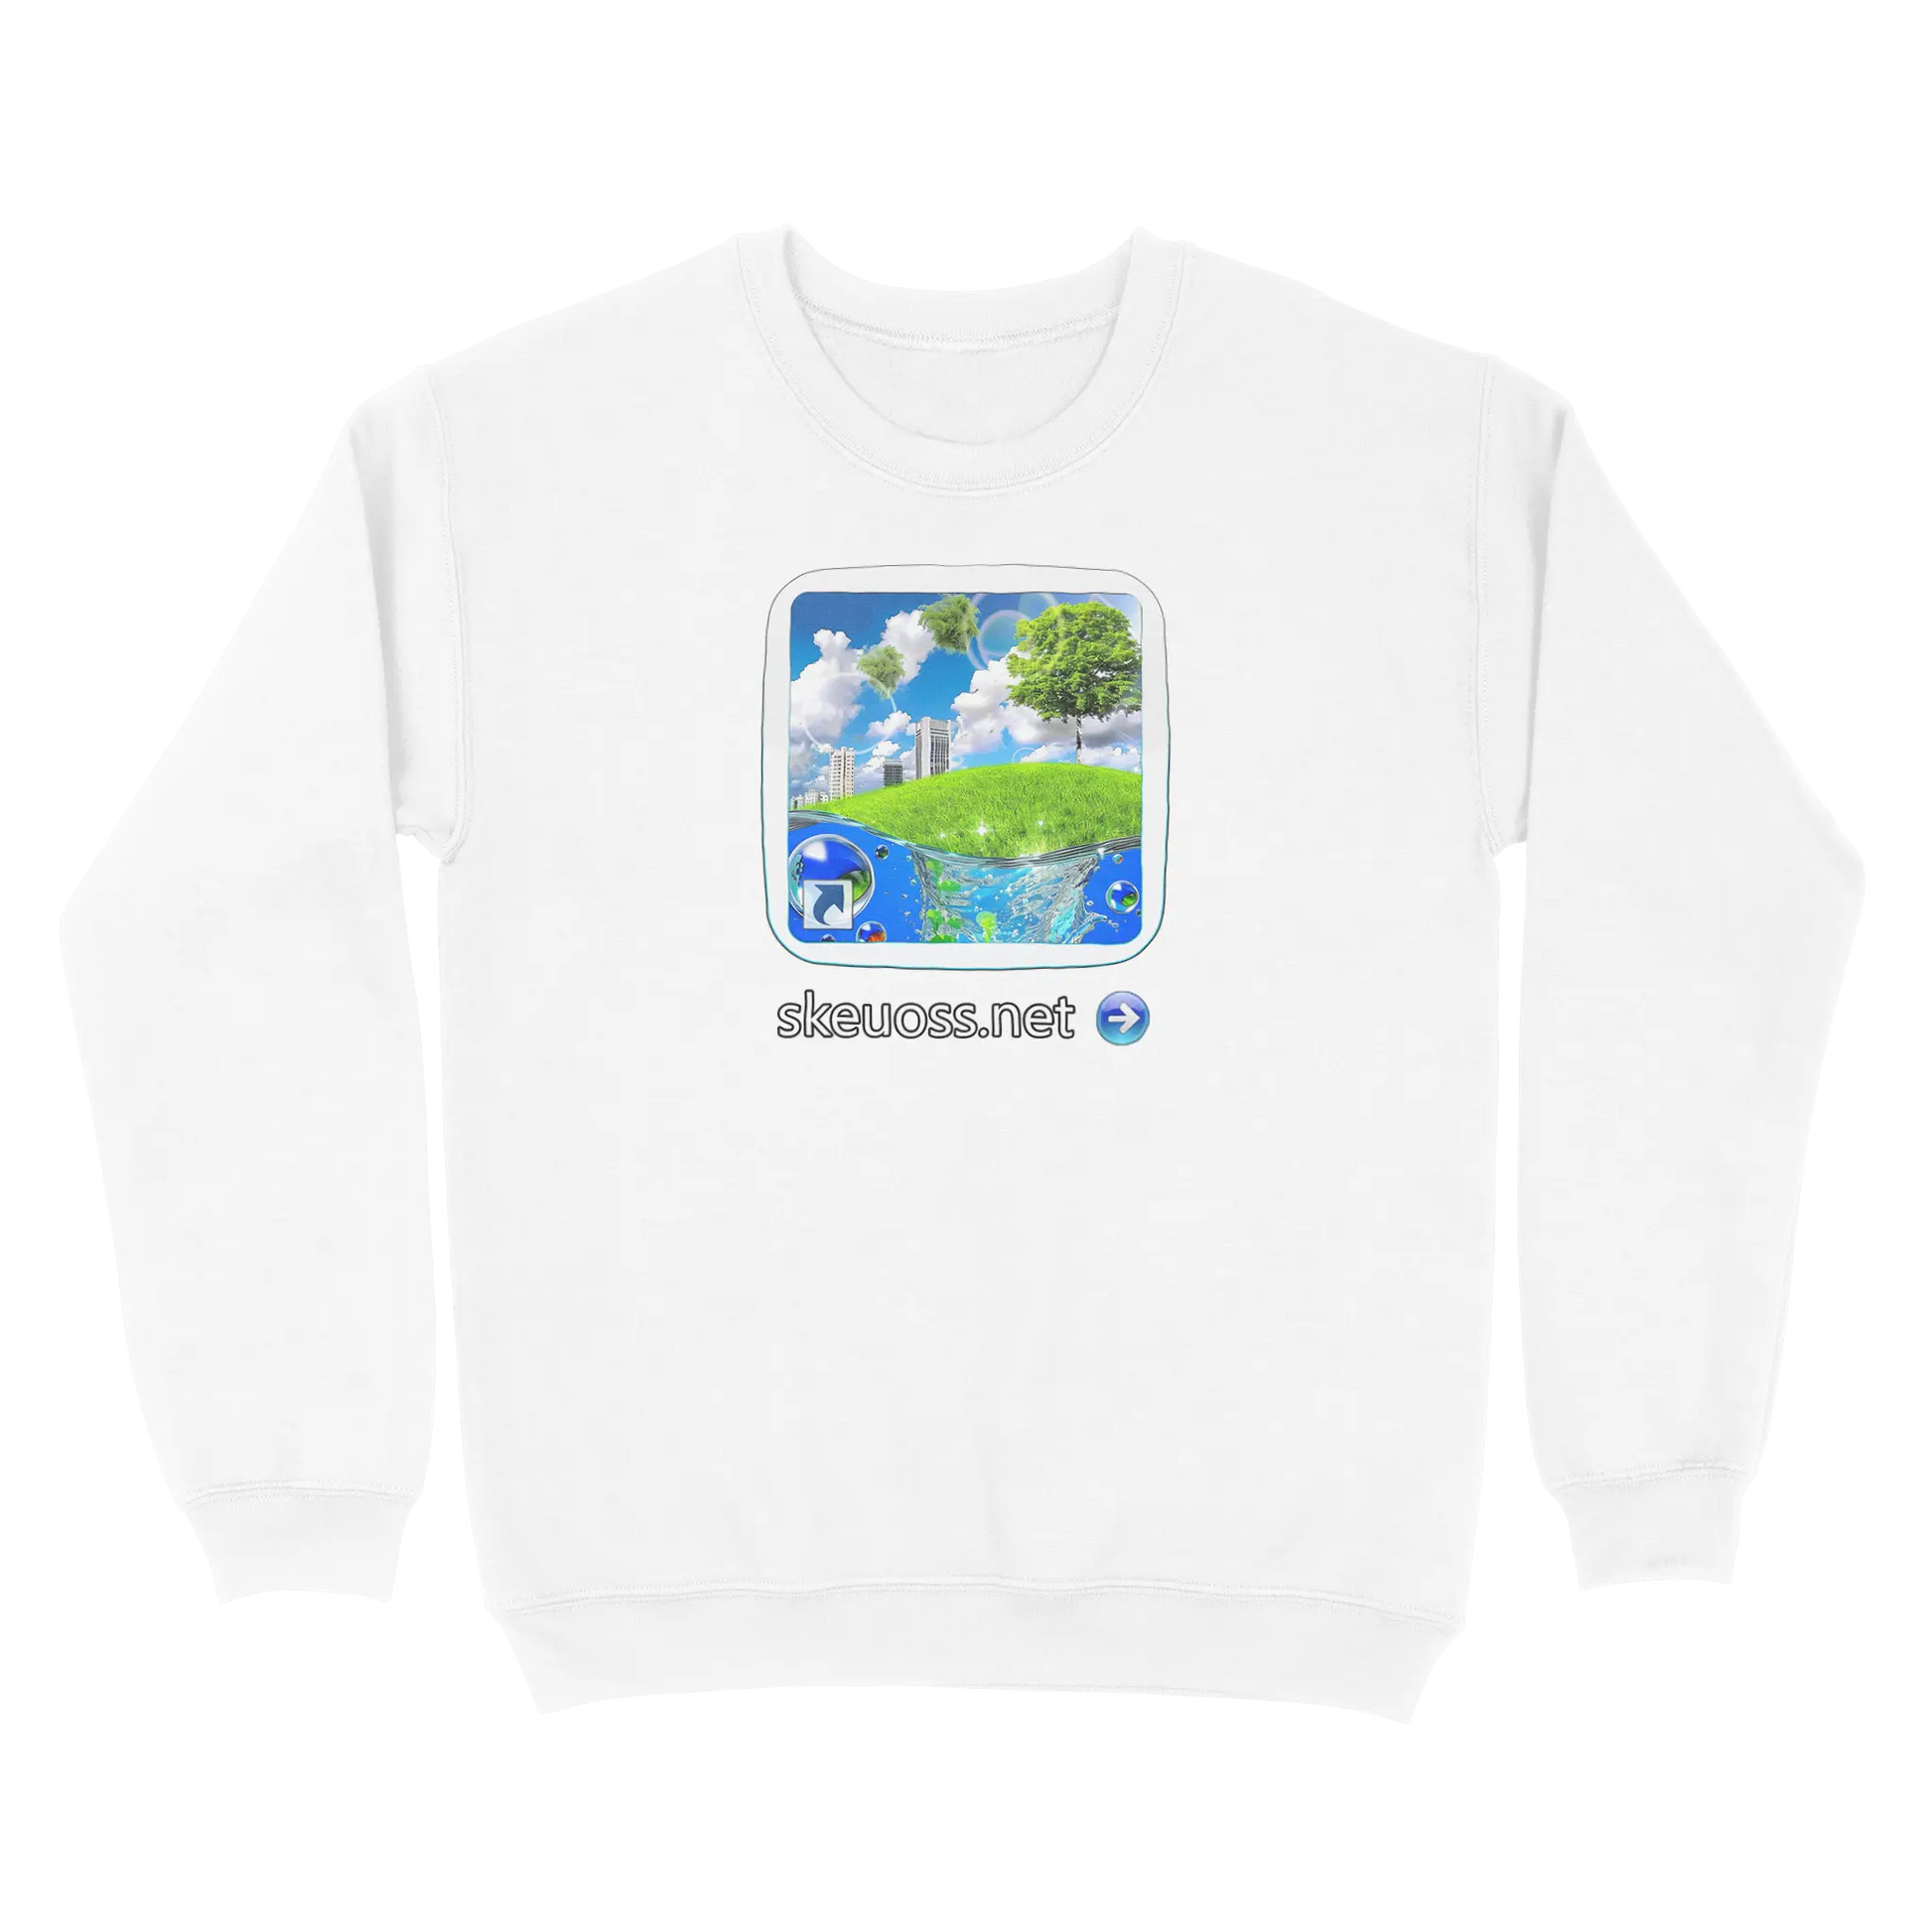 Frutiger Aero Sweatshirt - User Login Collection - User 400